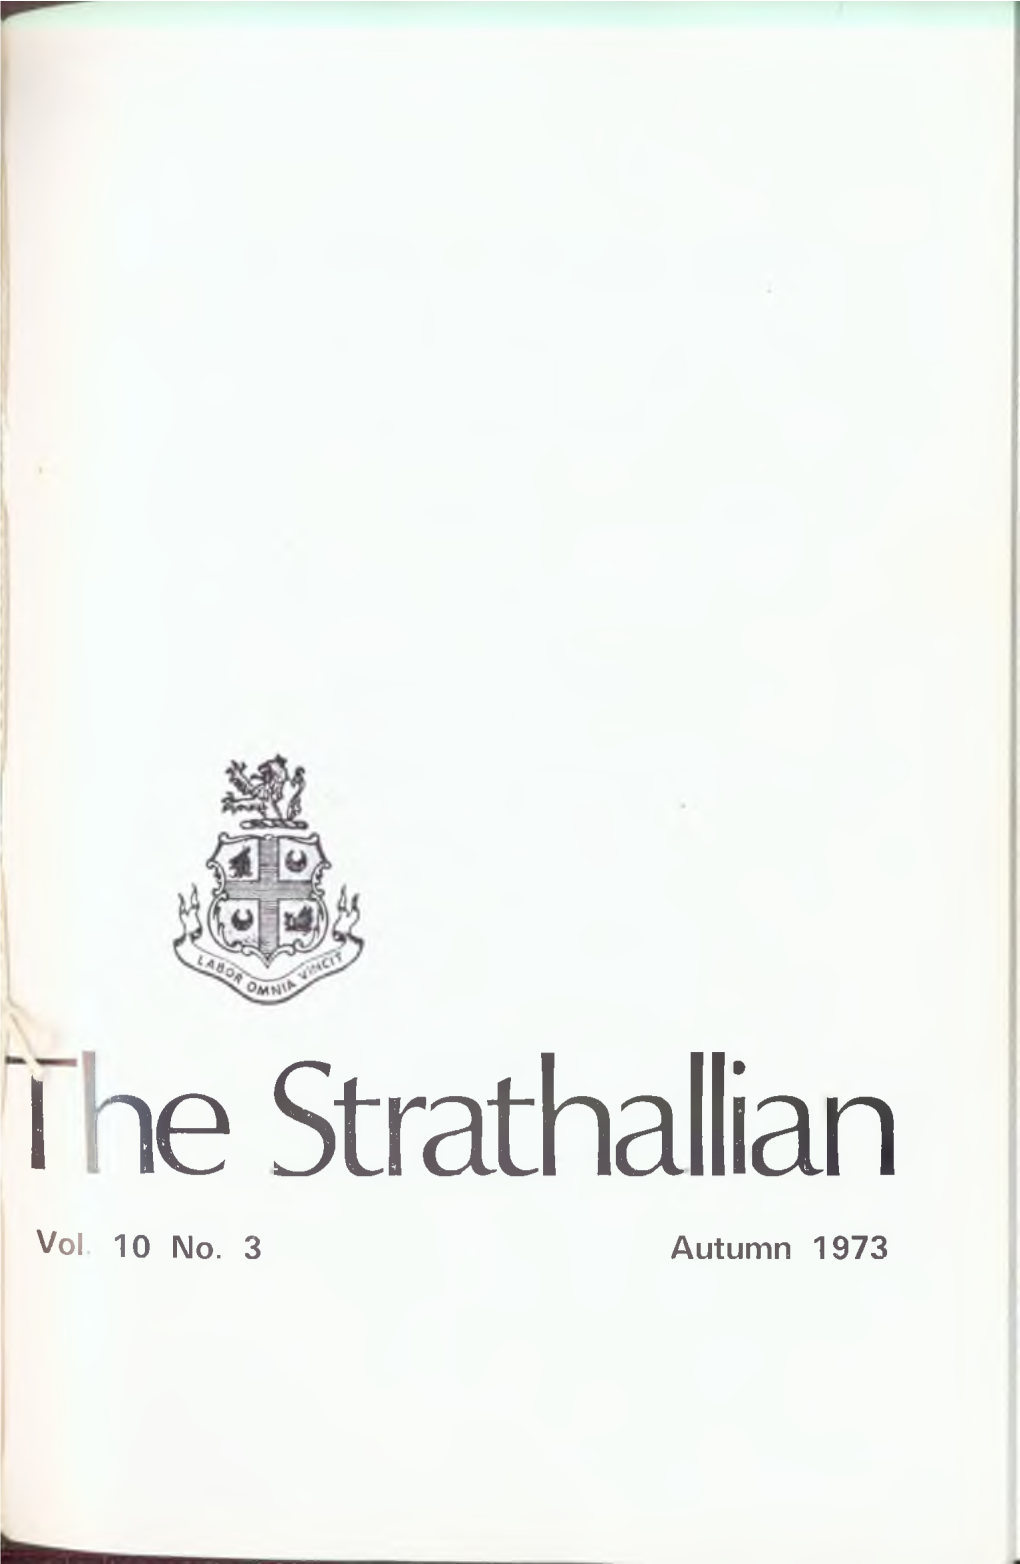 I Ie Strathallian Vol 10 No